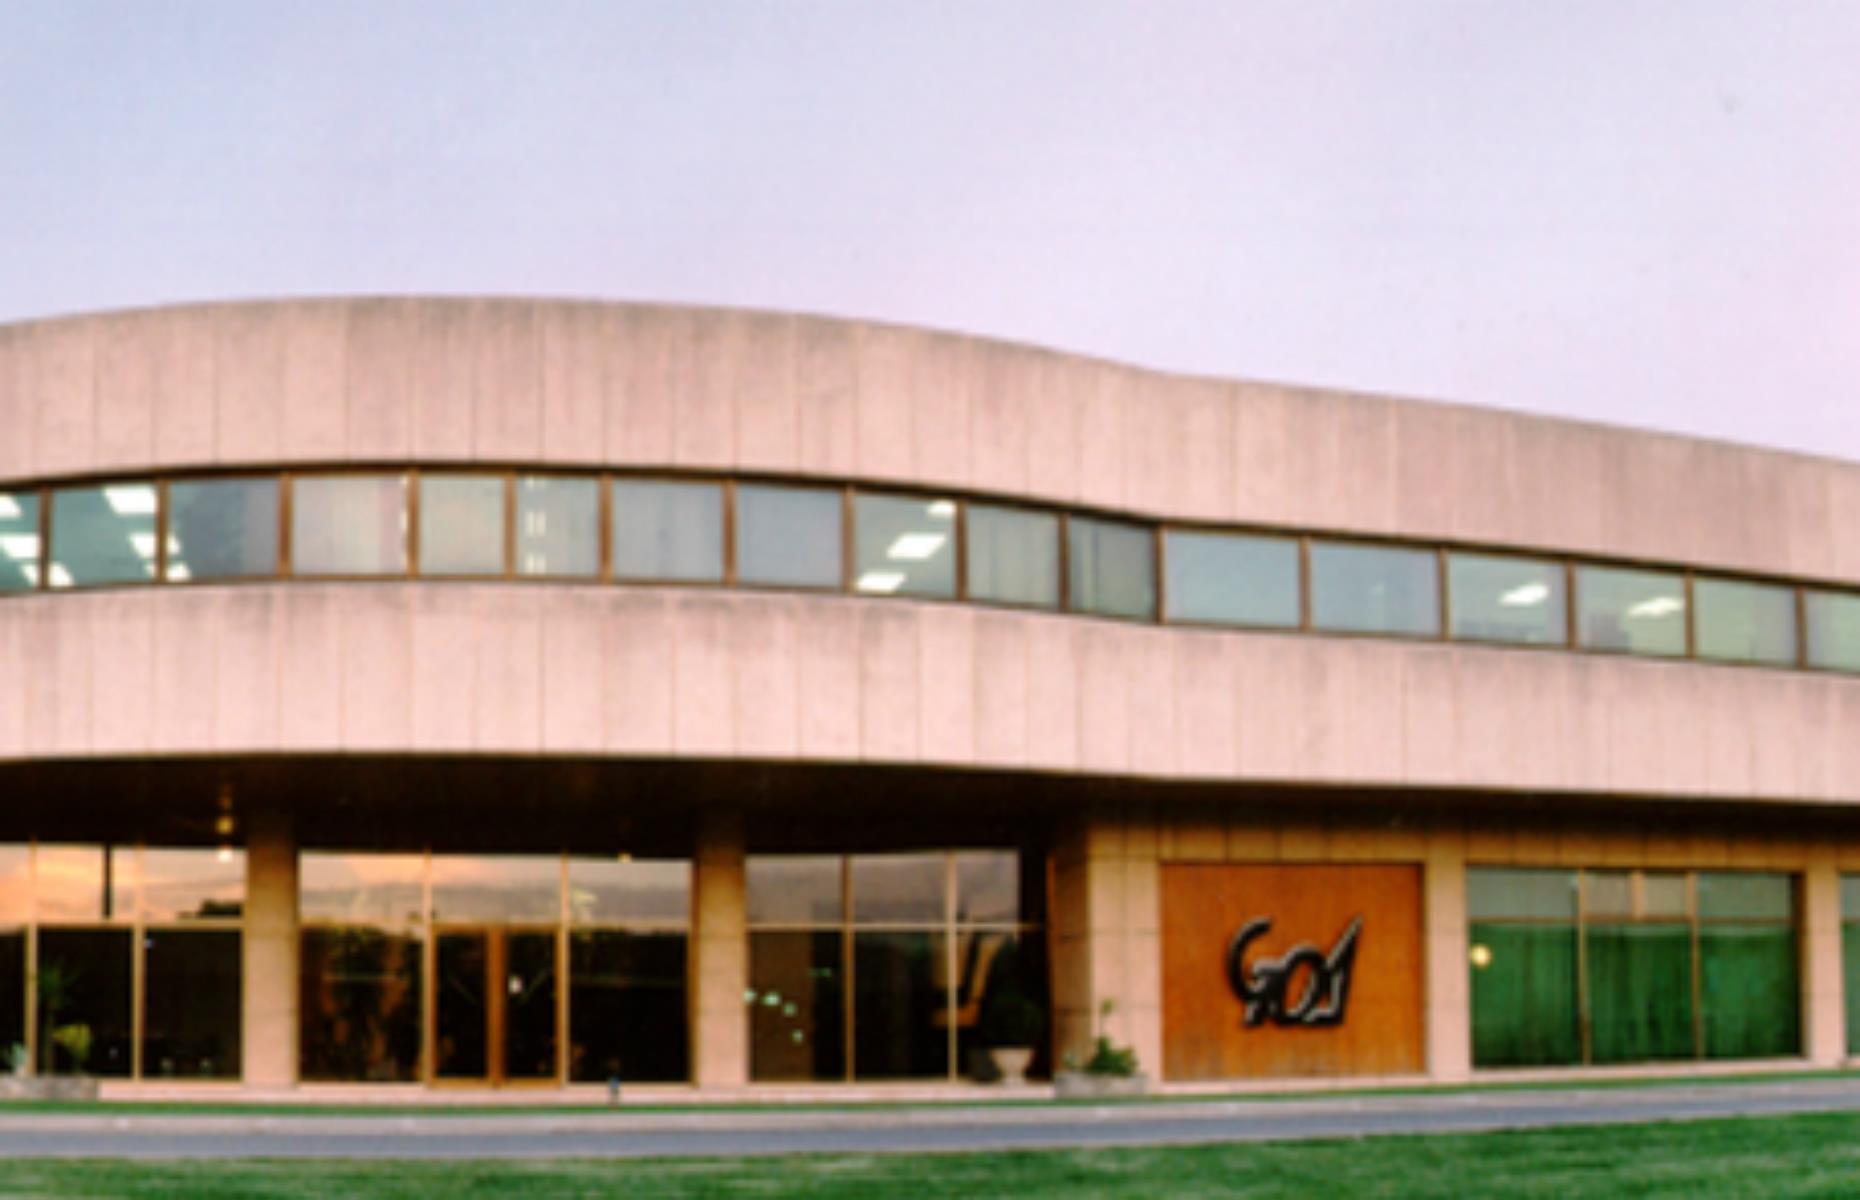 Company headquarters are established